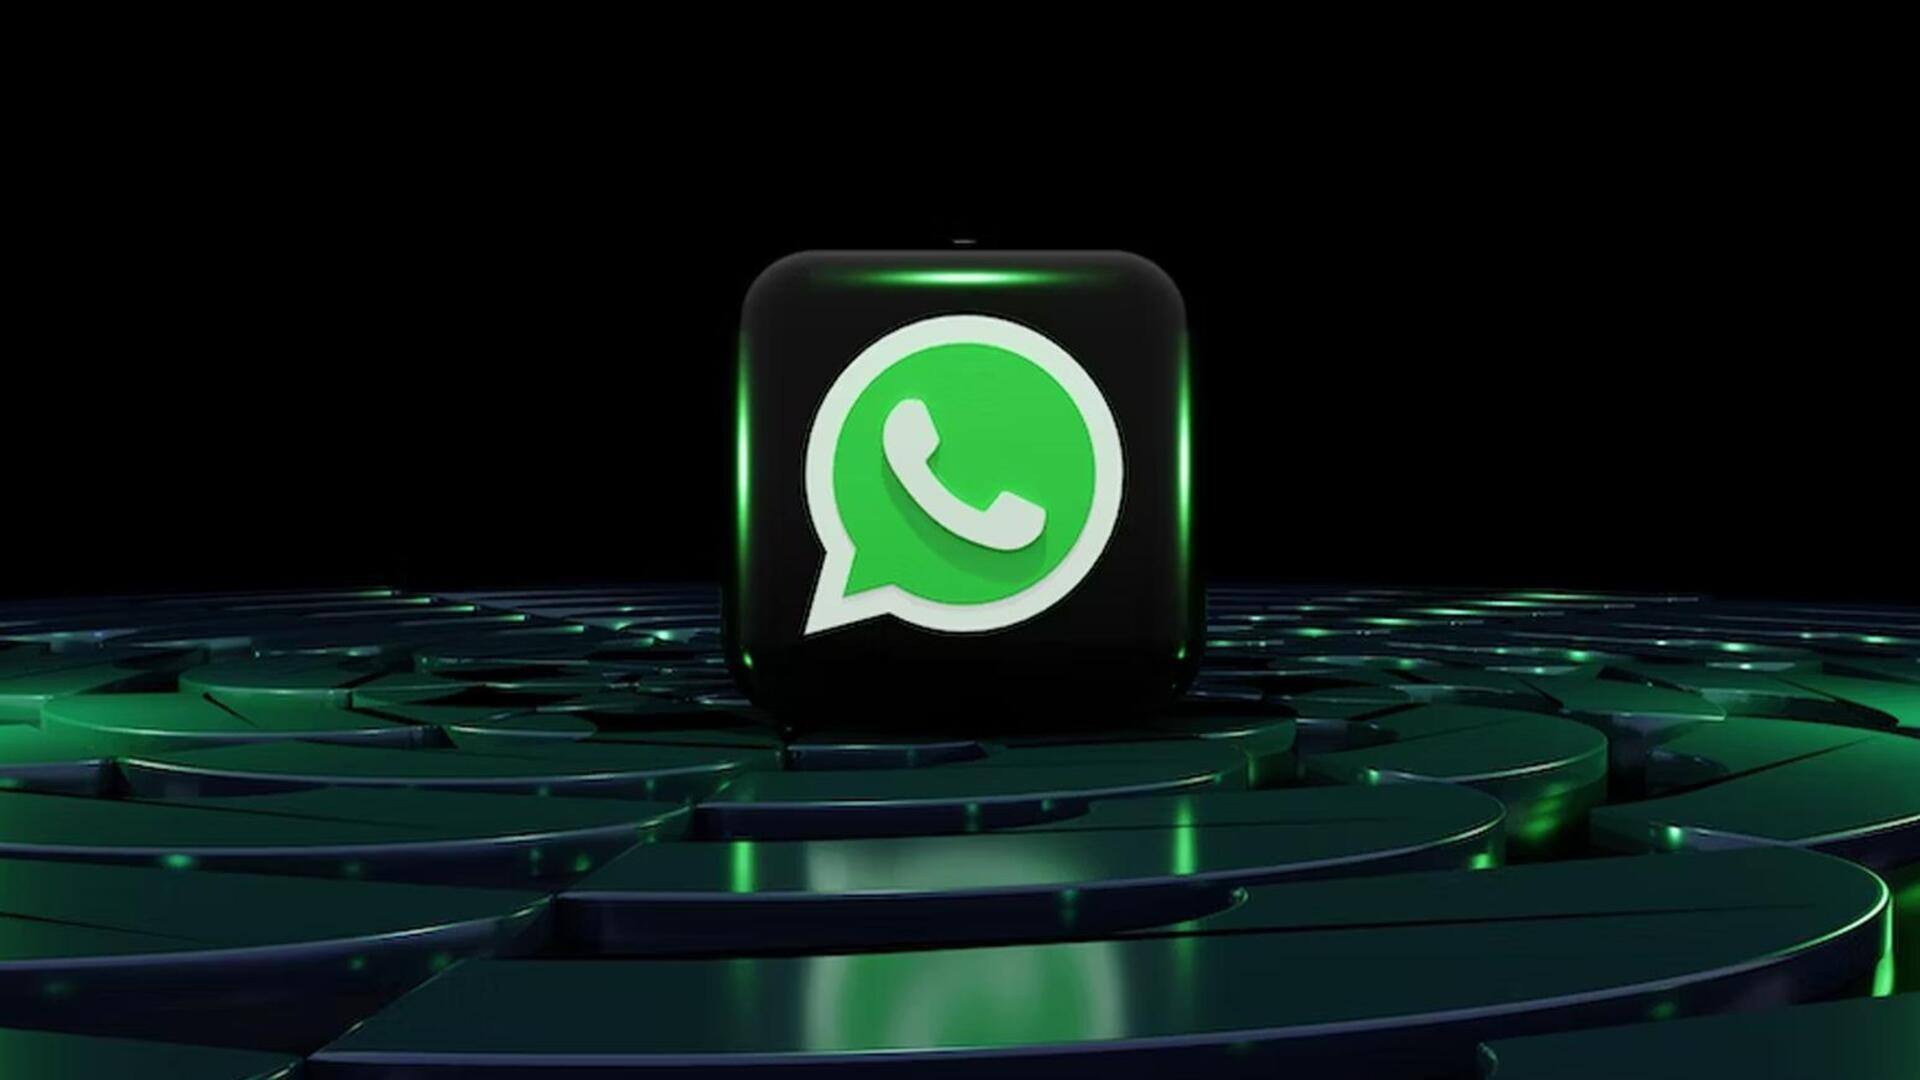 व्हाट्सऐप ने पेश किया नया फीचर, मैक यूजर्स भी अब कर सकेंगे ग्रुप कॉल